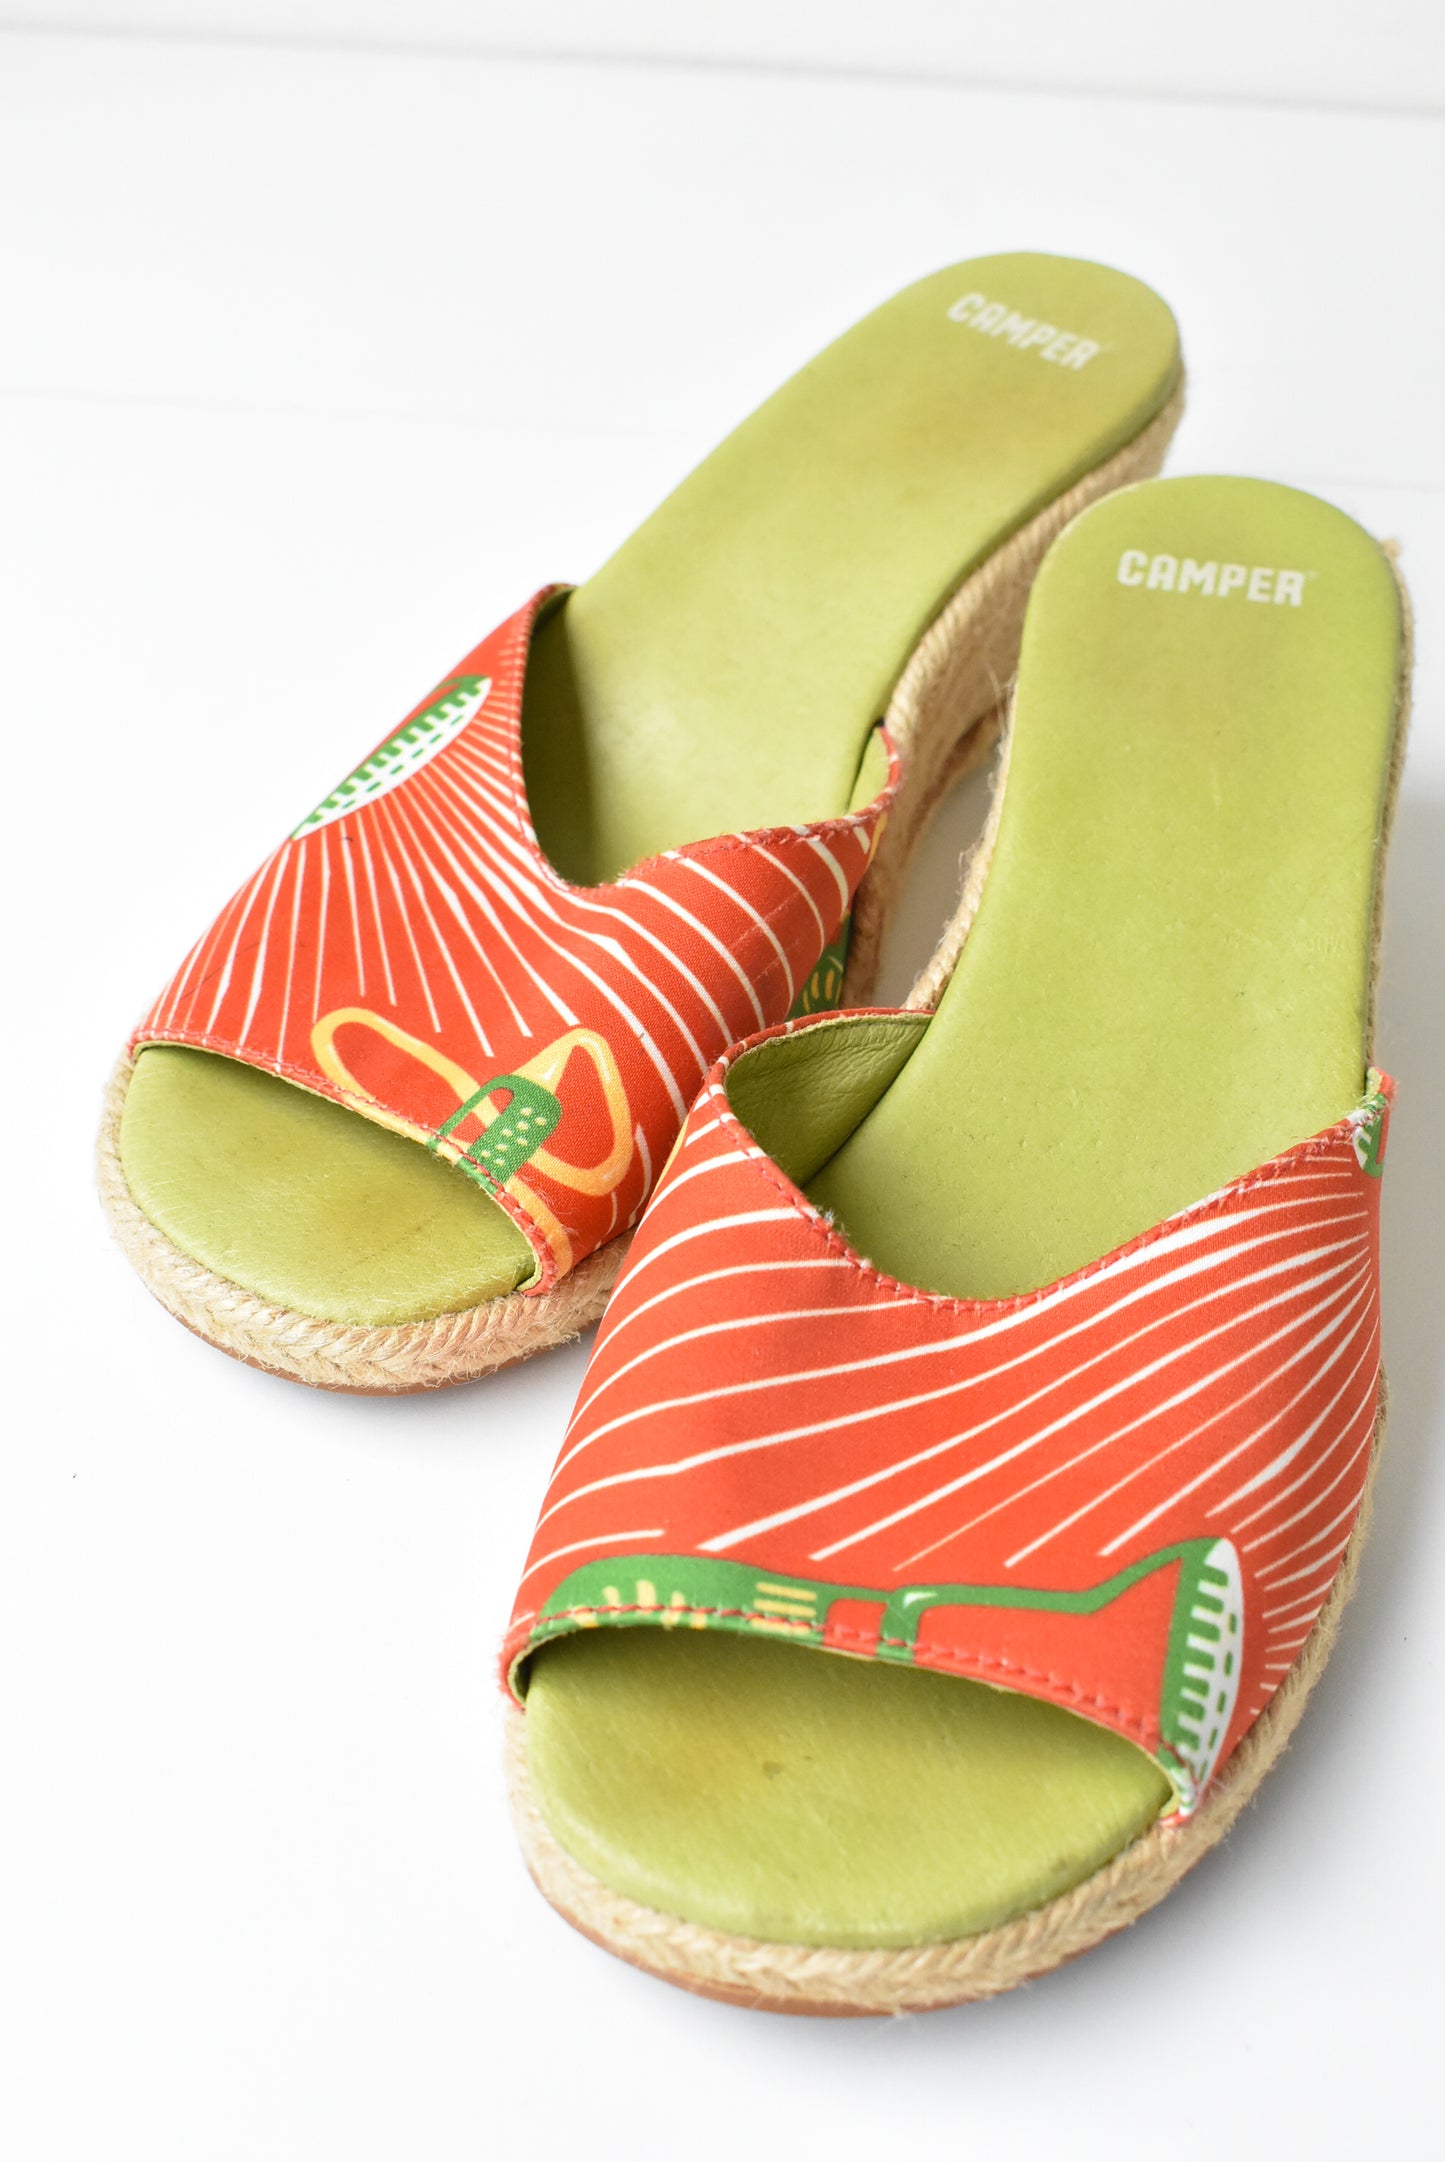 Camper green, orange, rattan wedge sandals